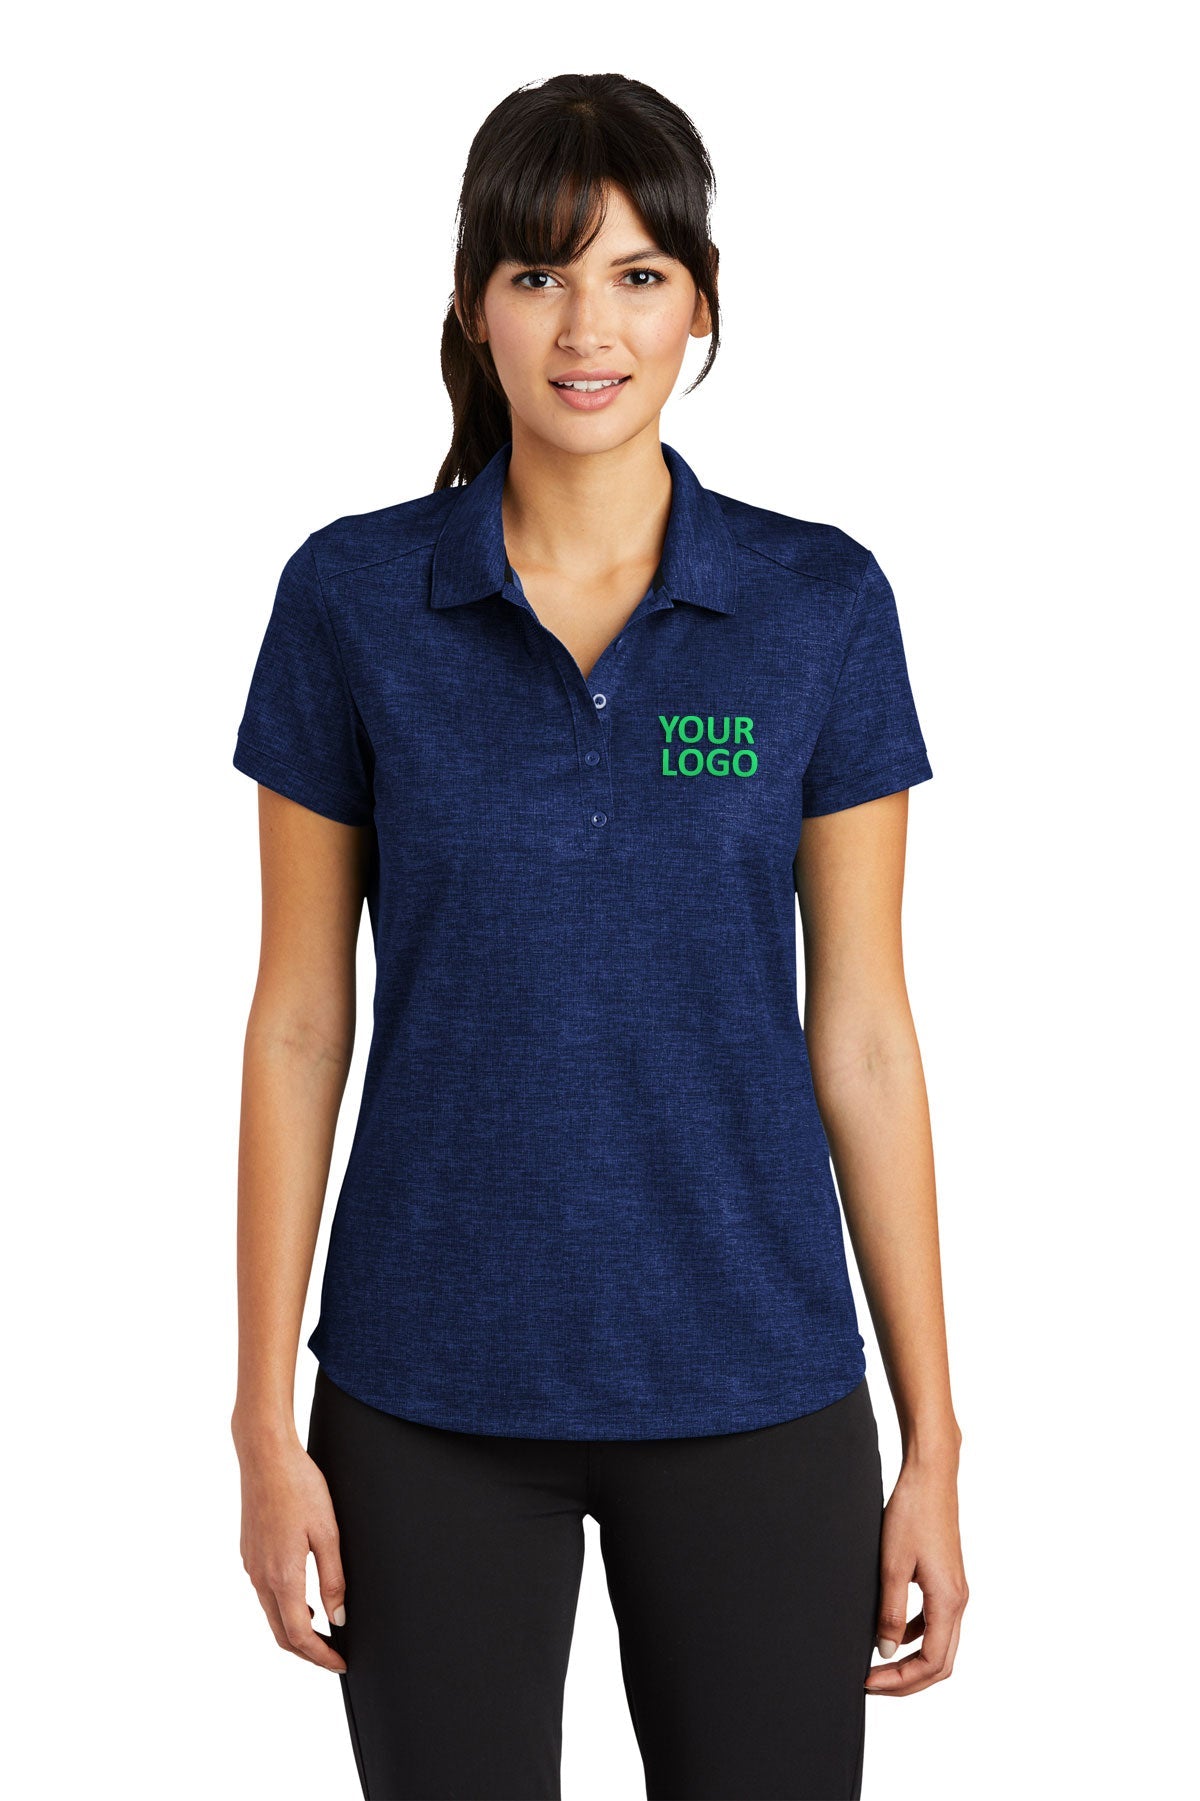 nike old royal/ marine 838961 polo shirts with embroidered custom logo